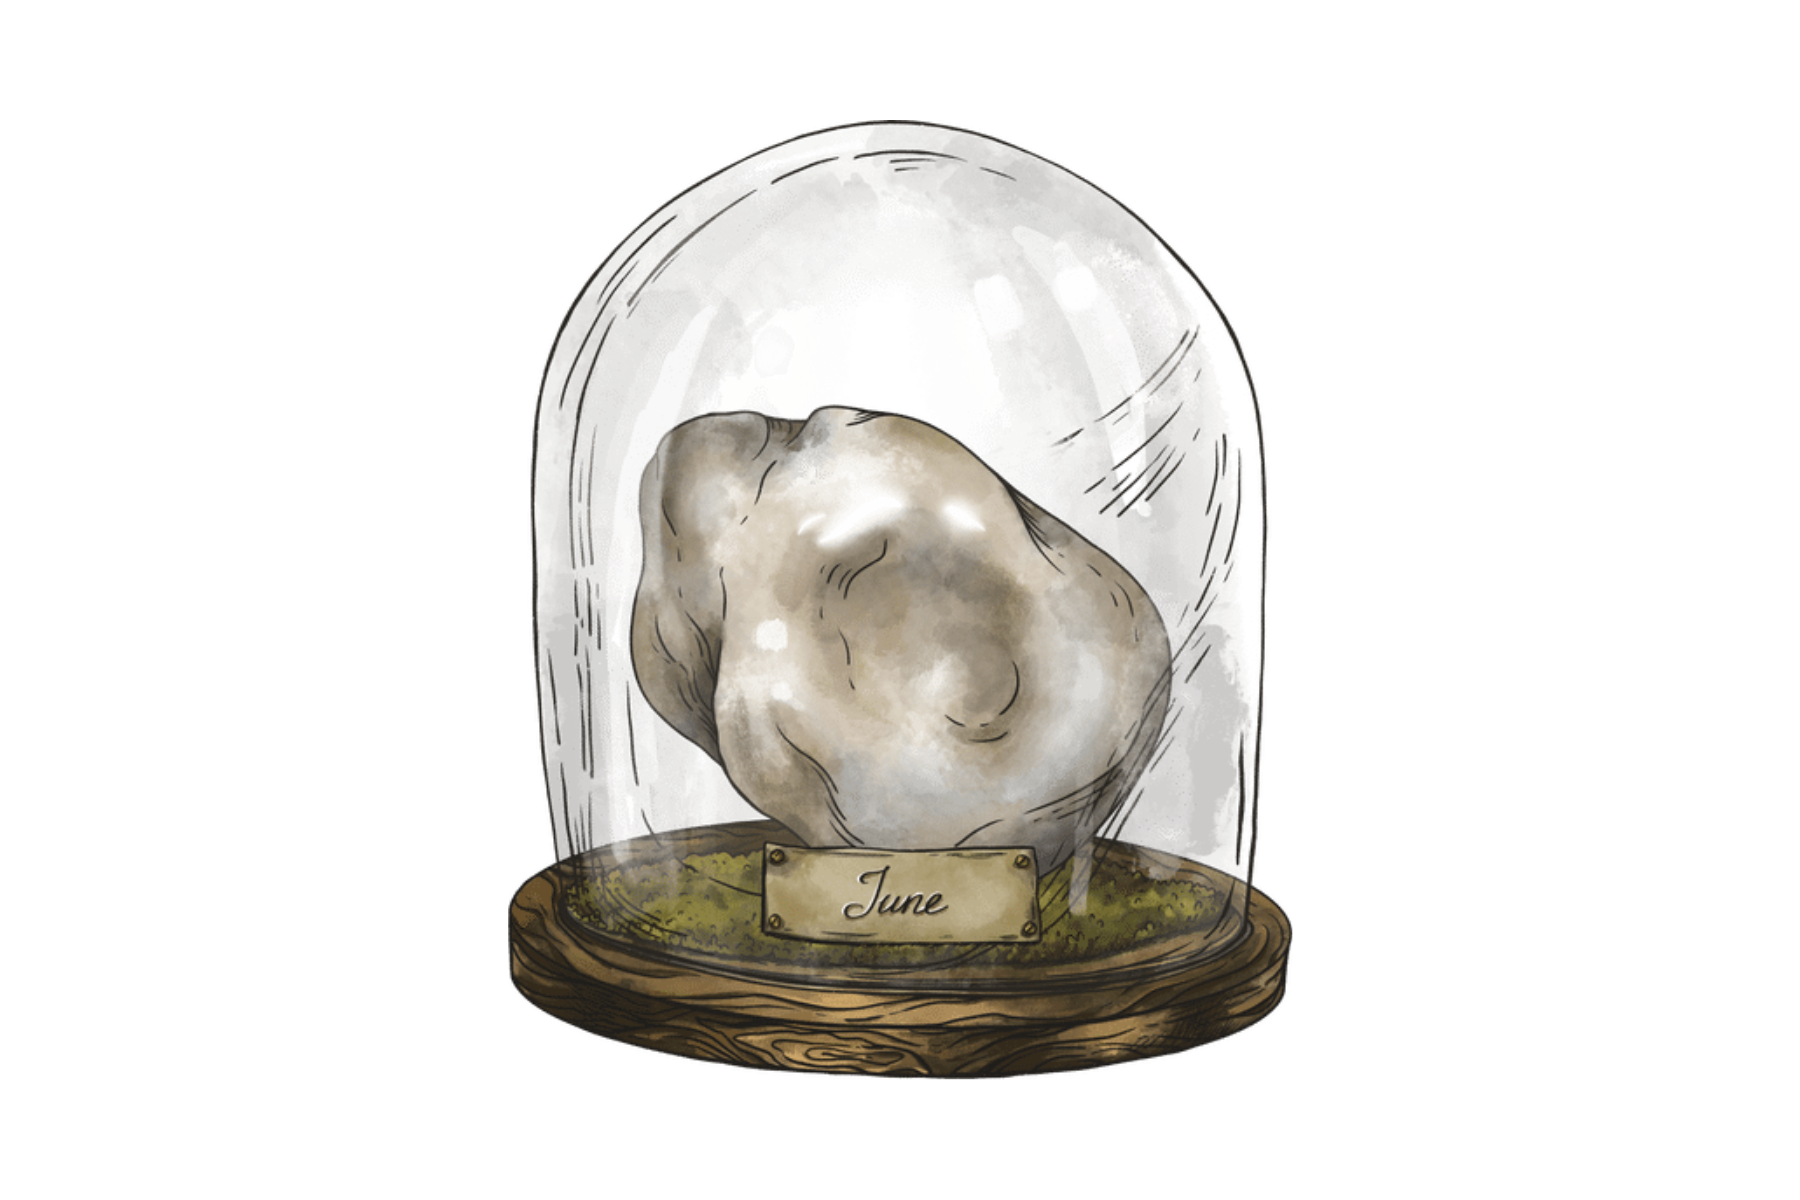 A glass jar with a pearl birthstone